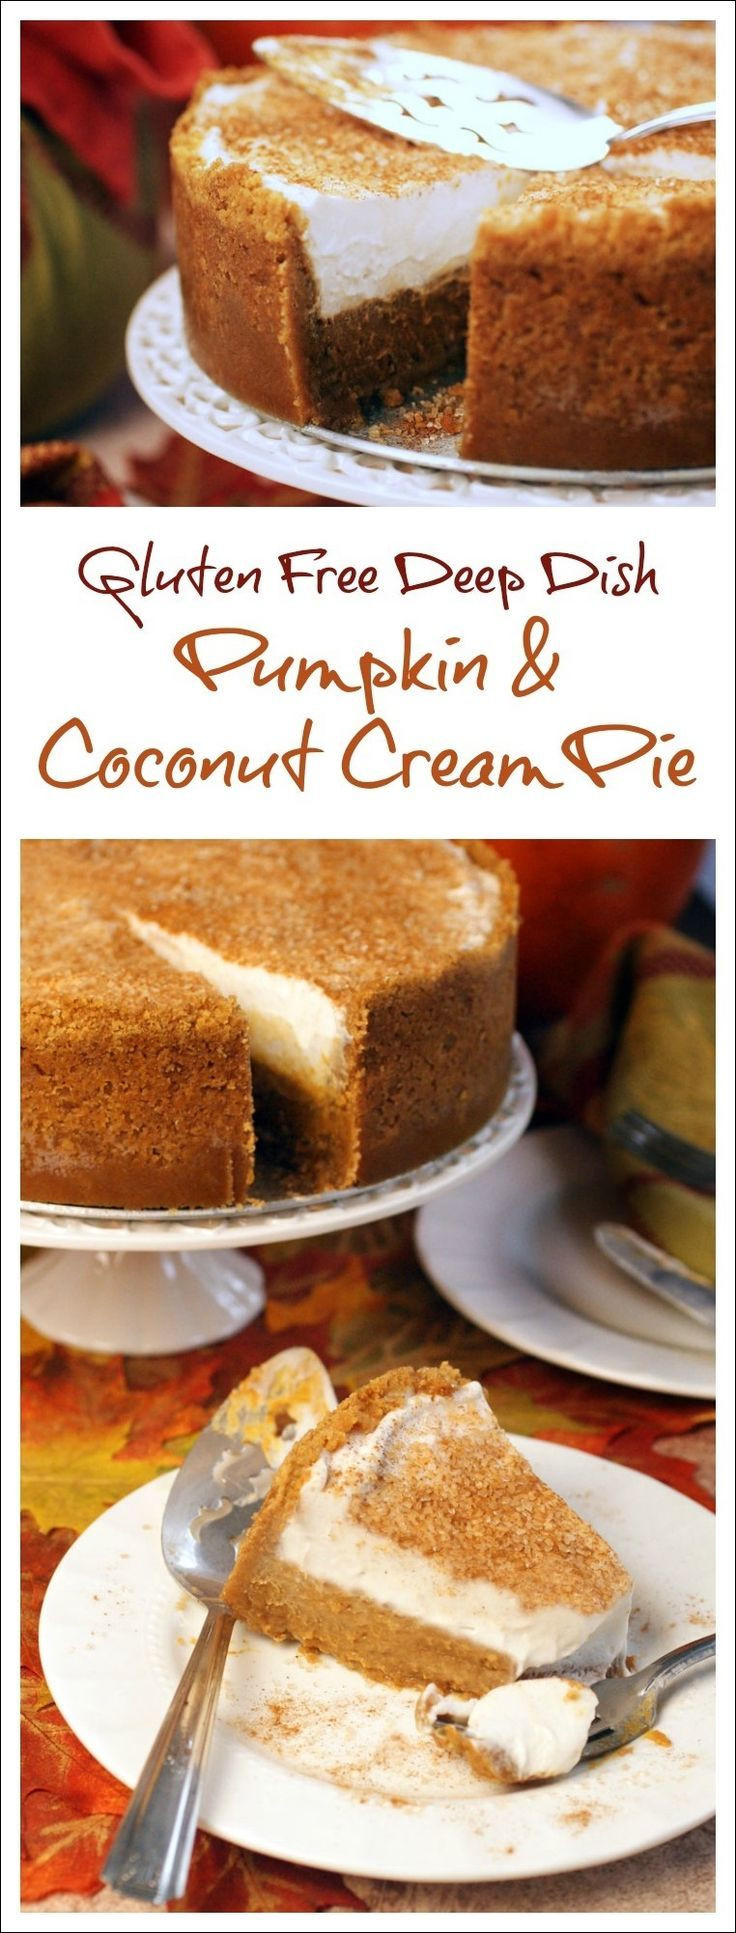 Dairy Free Pumpkin Recipes
 Gluten Free Deep Dish Pumpkin & Coconut Cream Pie